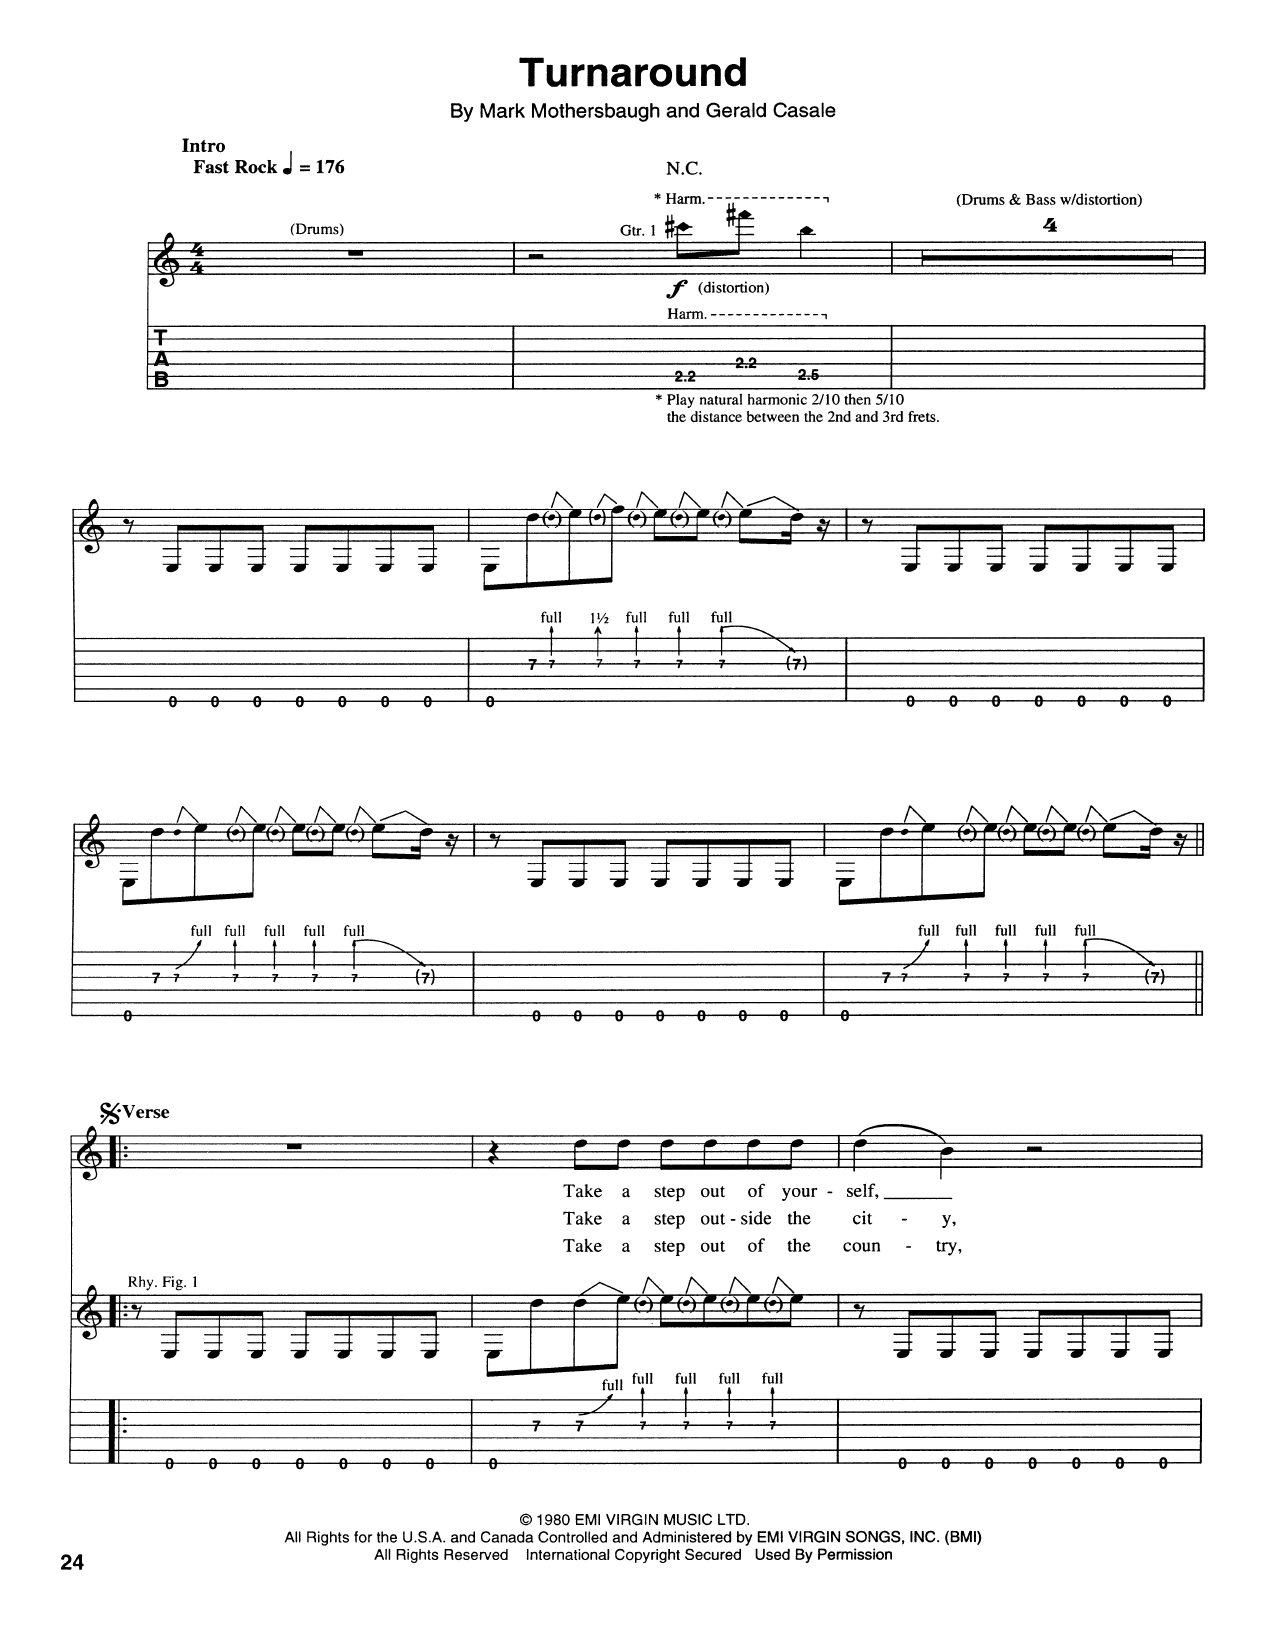 Nirvana Turn Around Sheet Music Notes & Chords for Guitar Tab - Download or Print PDF